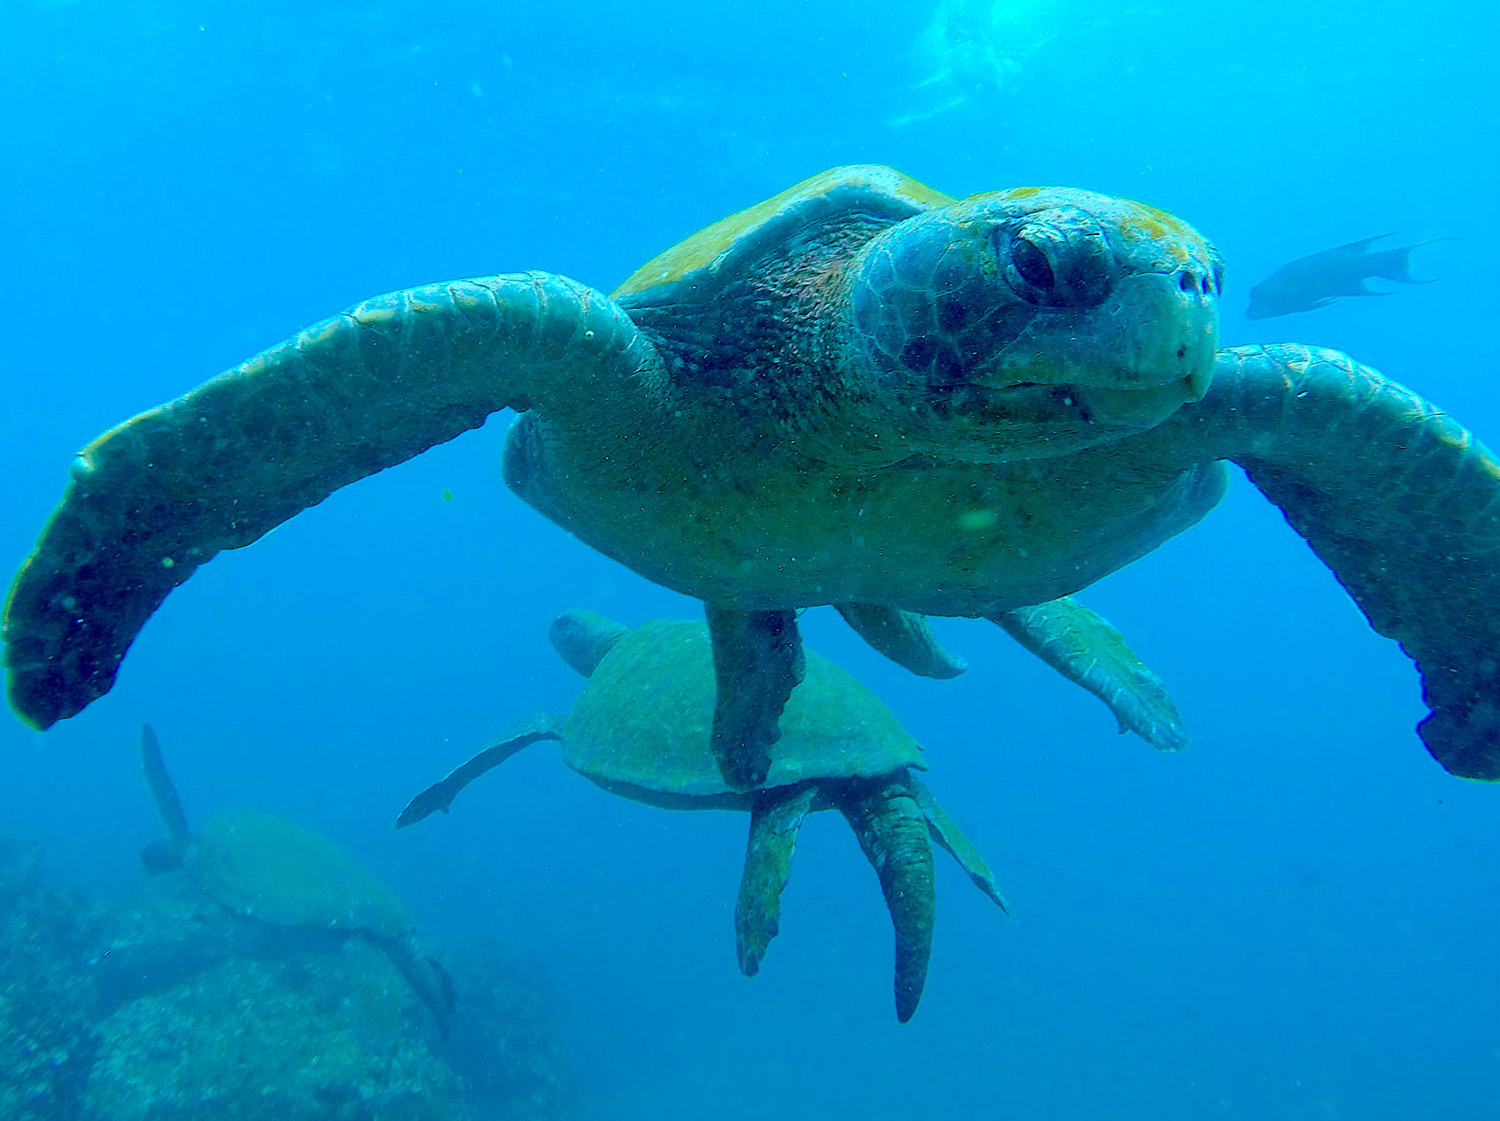 Galapagos sea turtle swimming underwater